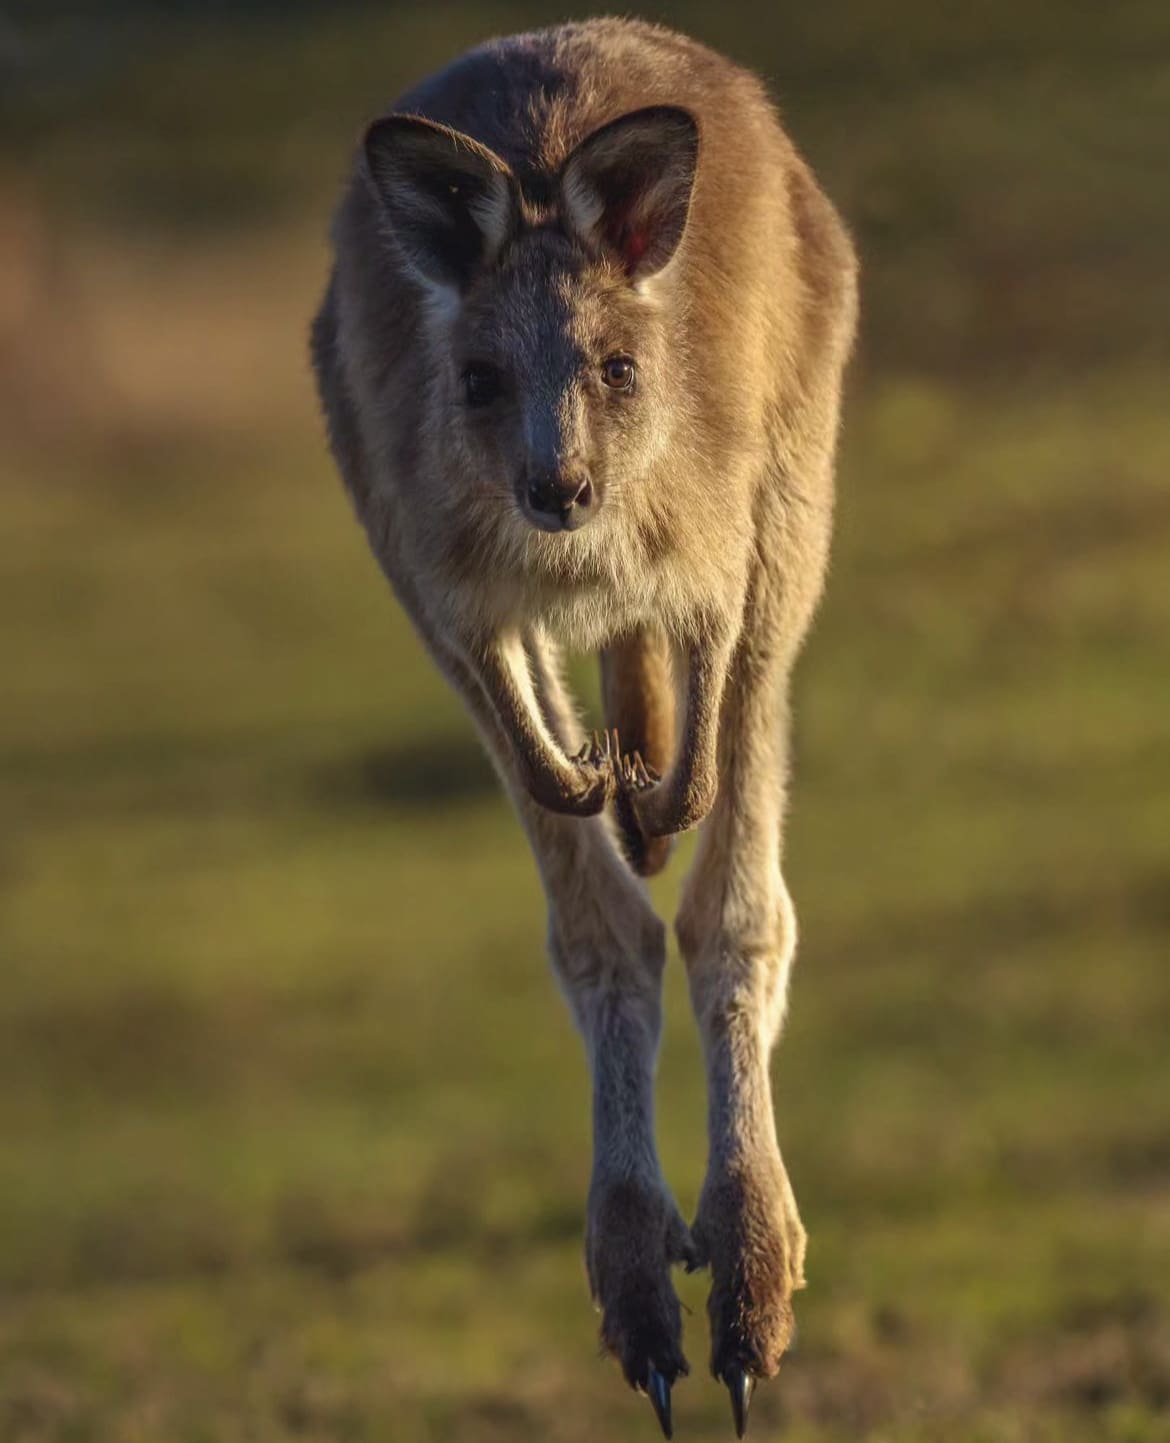 Young Kangaroo hopping through a field